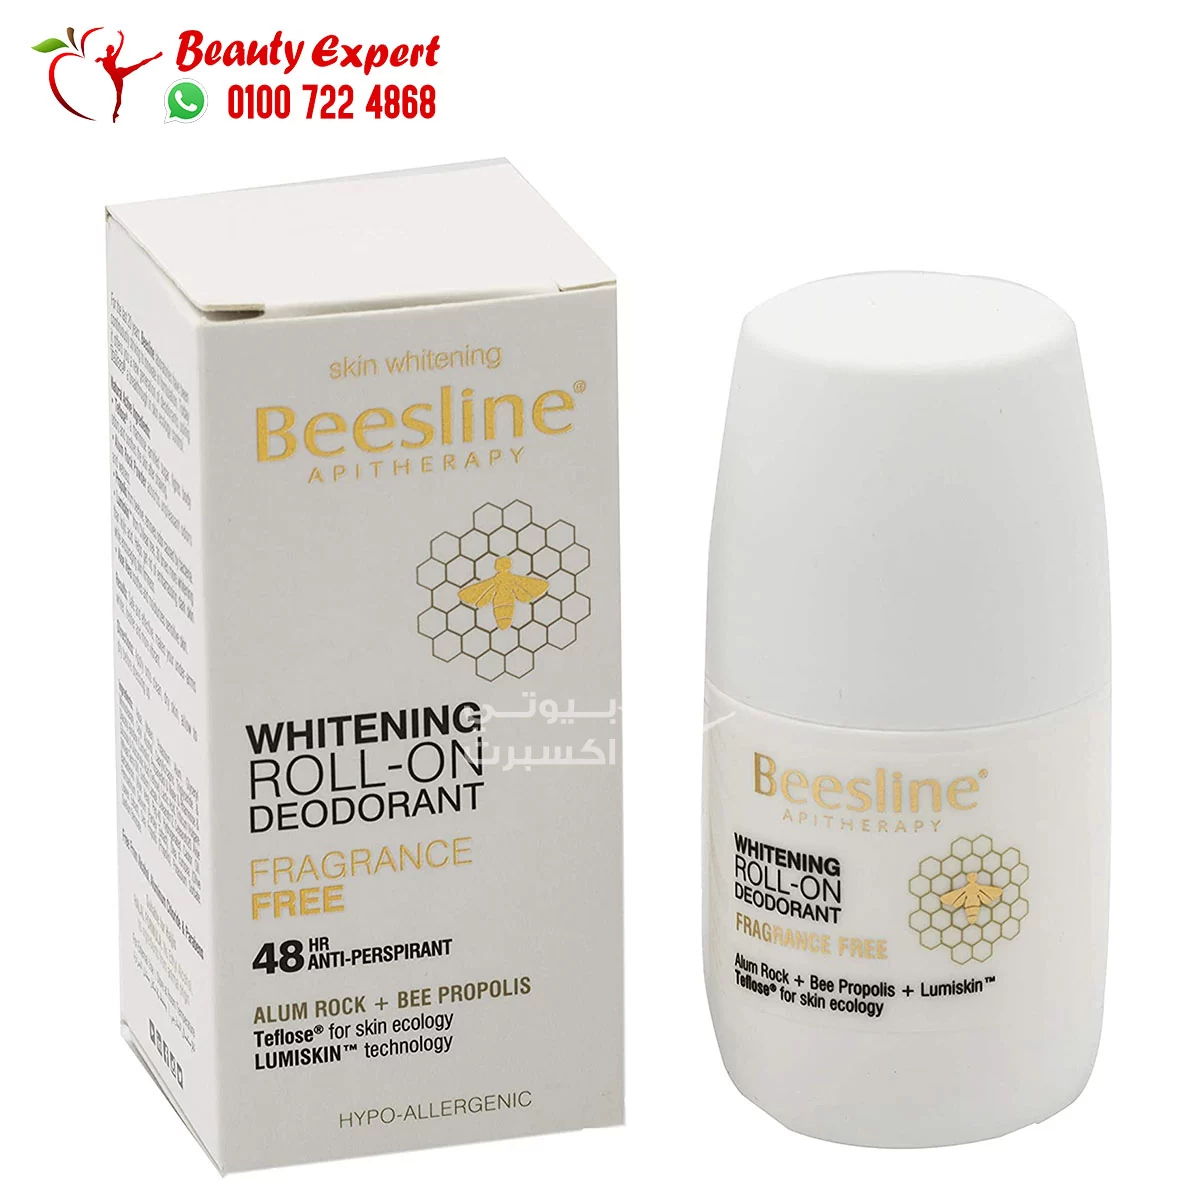 Beesline antiperspirant whitening roll on deodorant